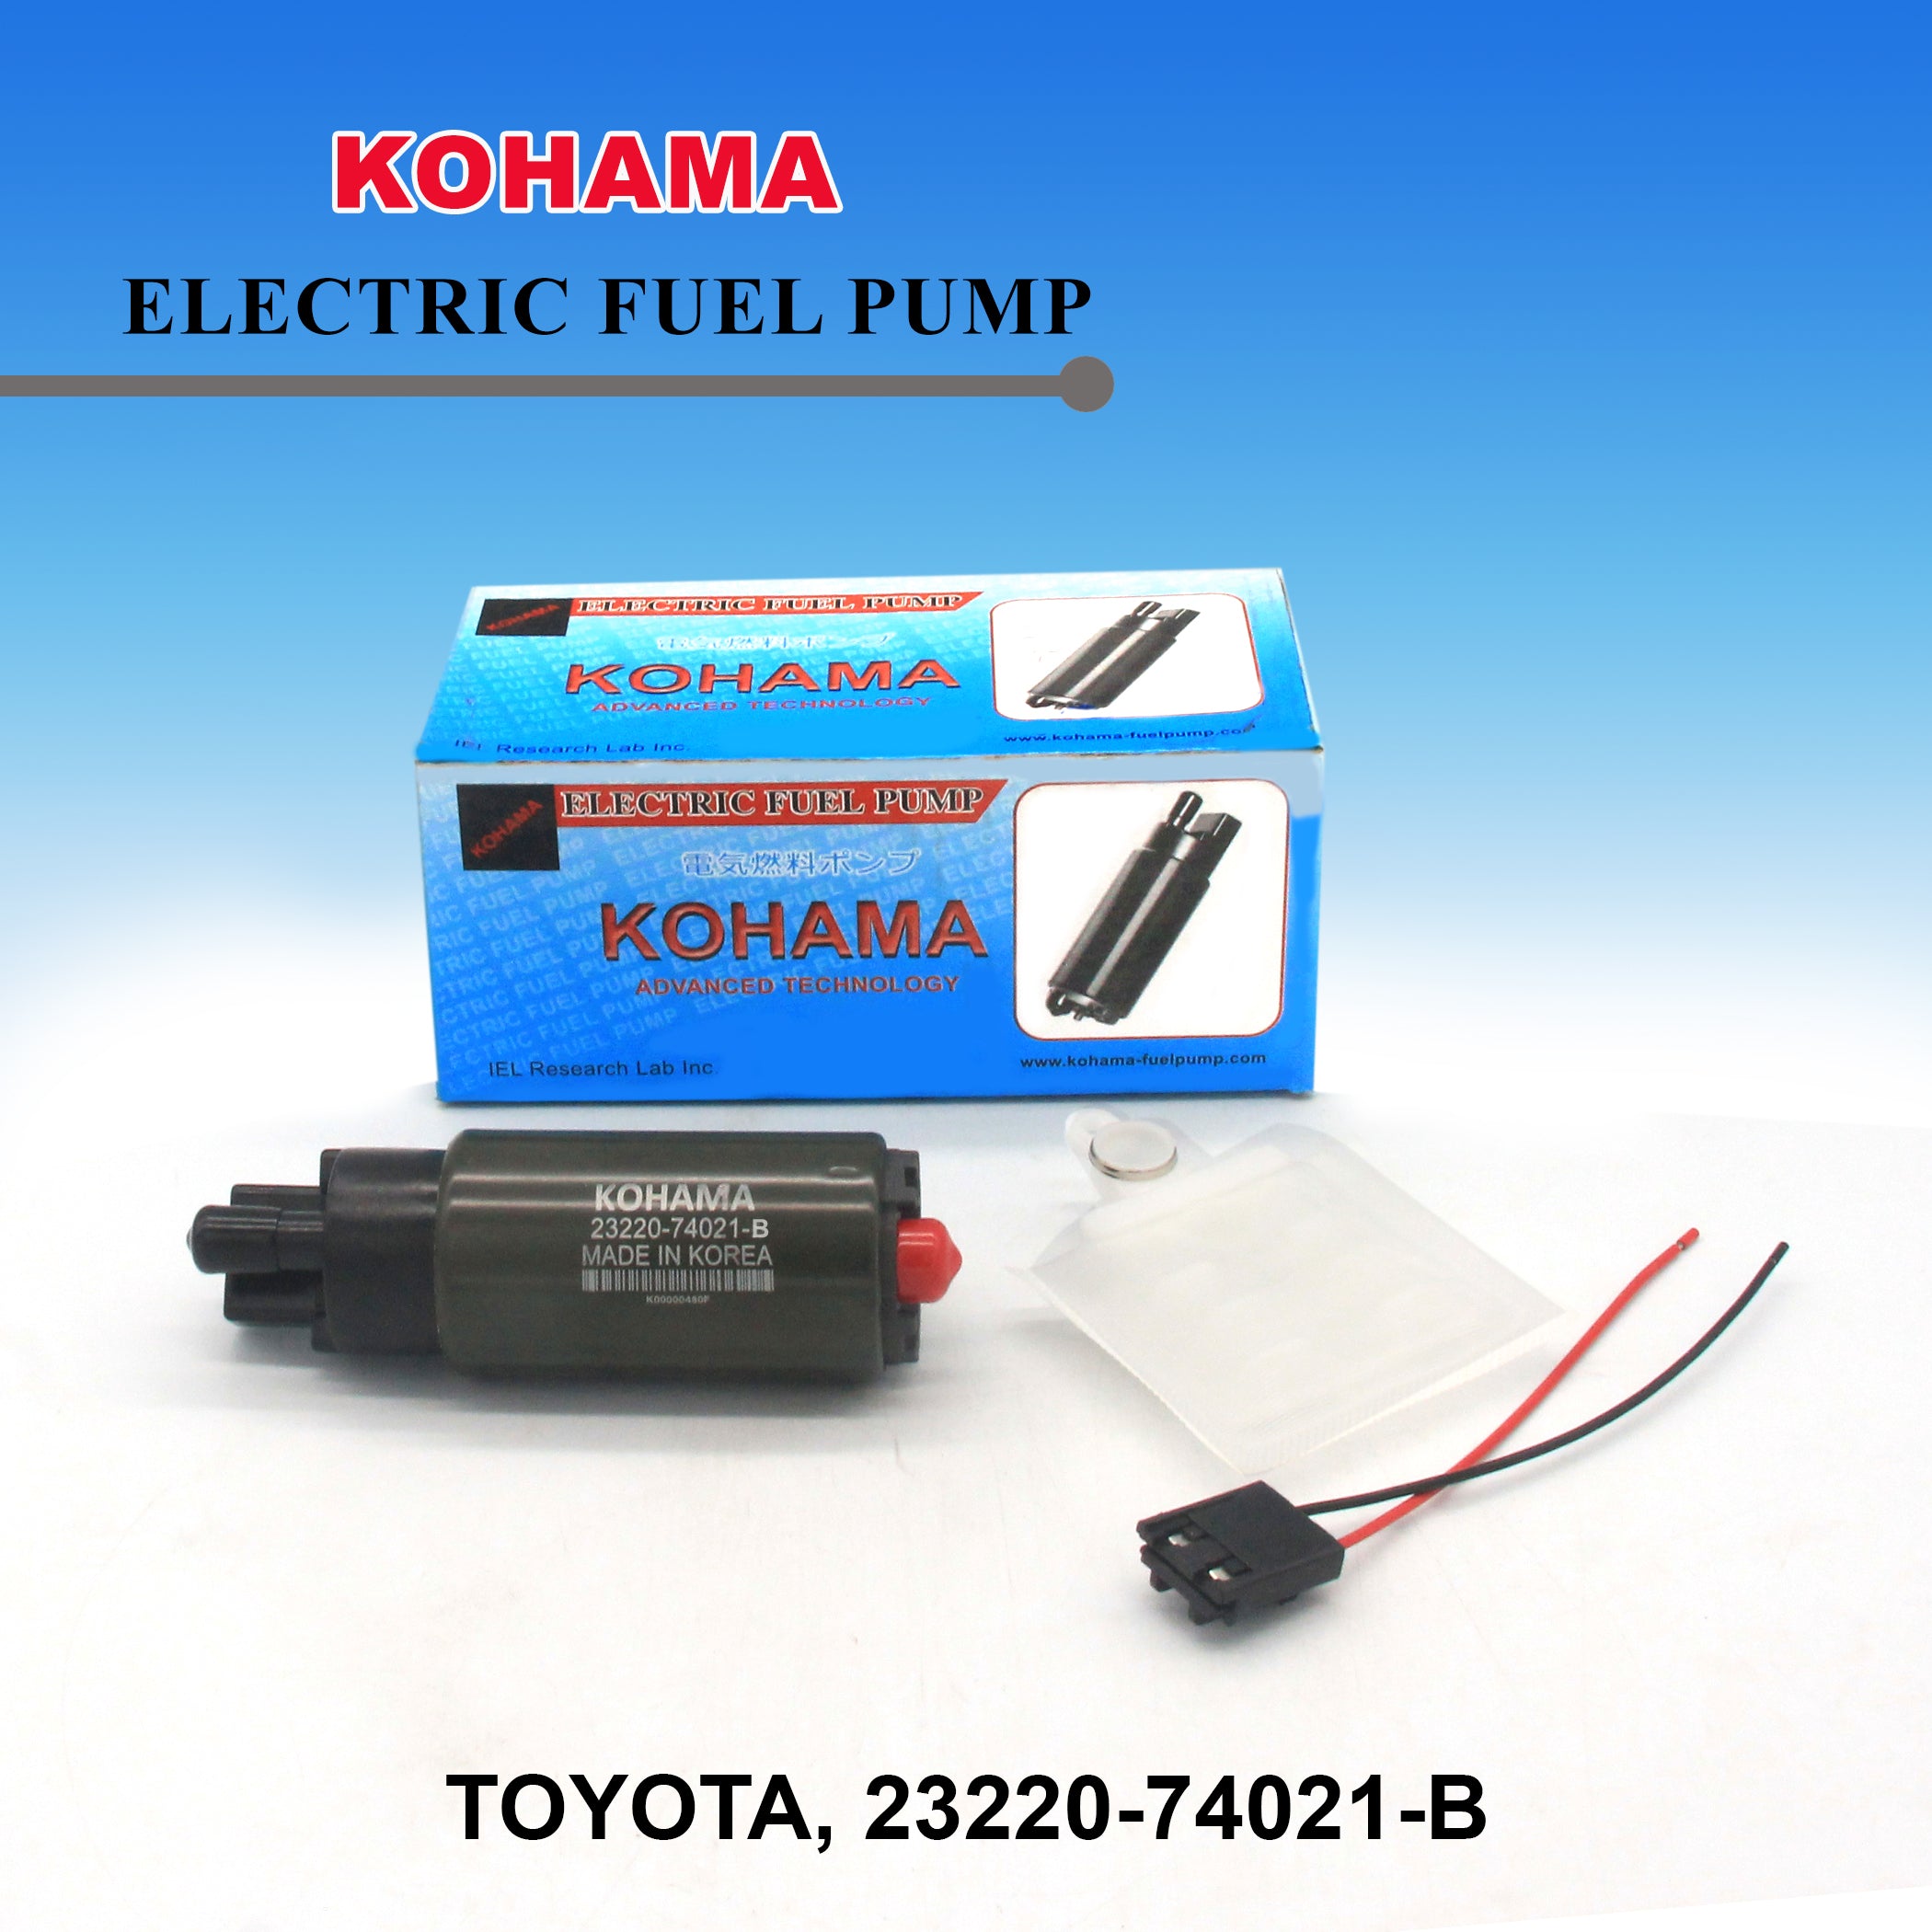 In-Tank Fuel Pump, KOHAMA, Small, 23220-74021-B (008548)